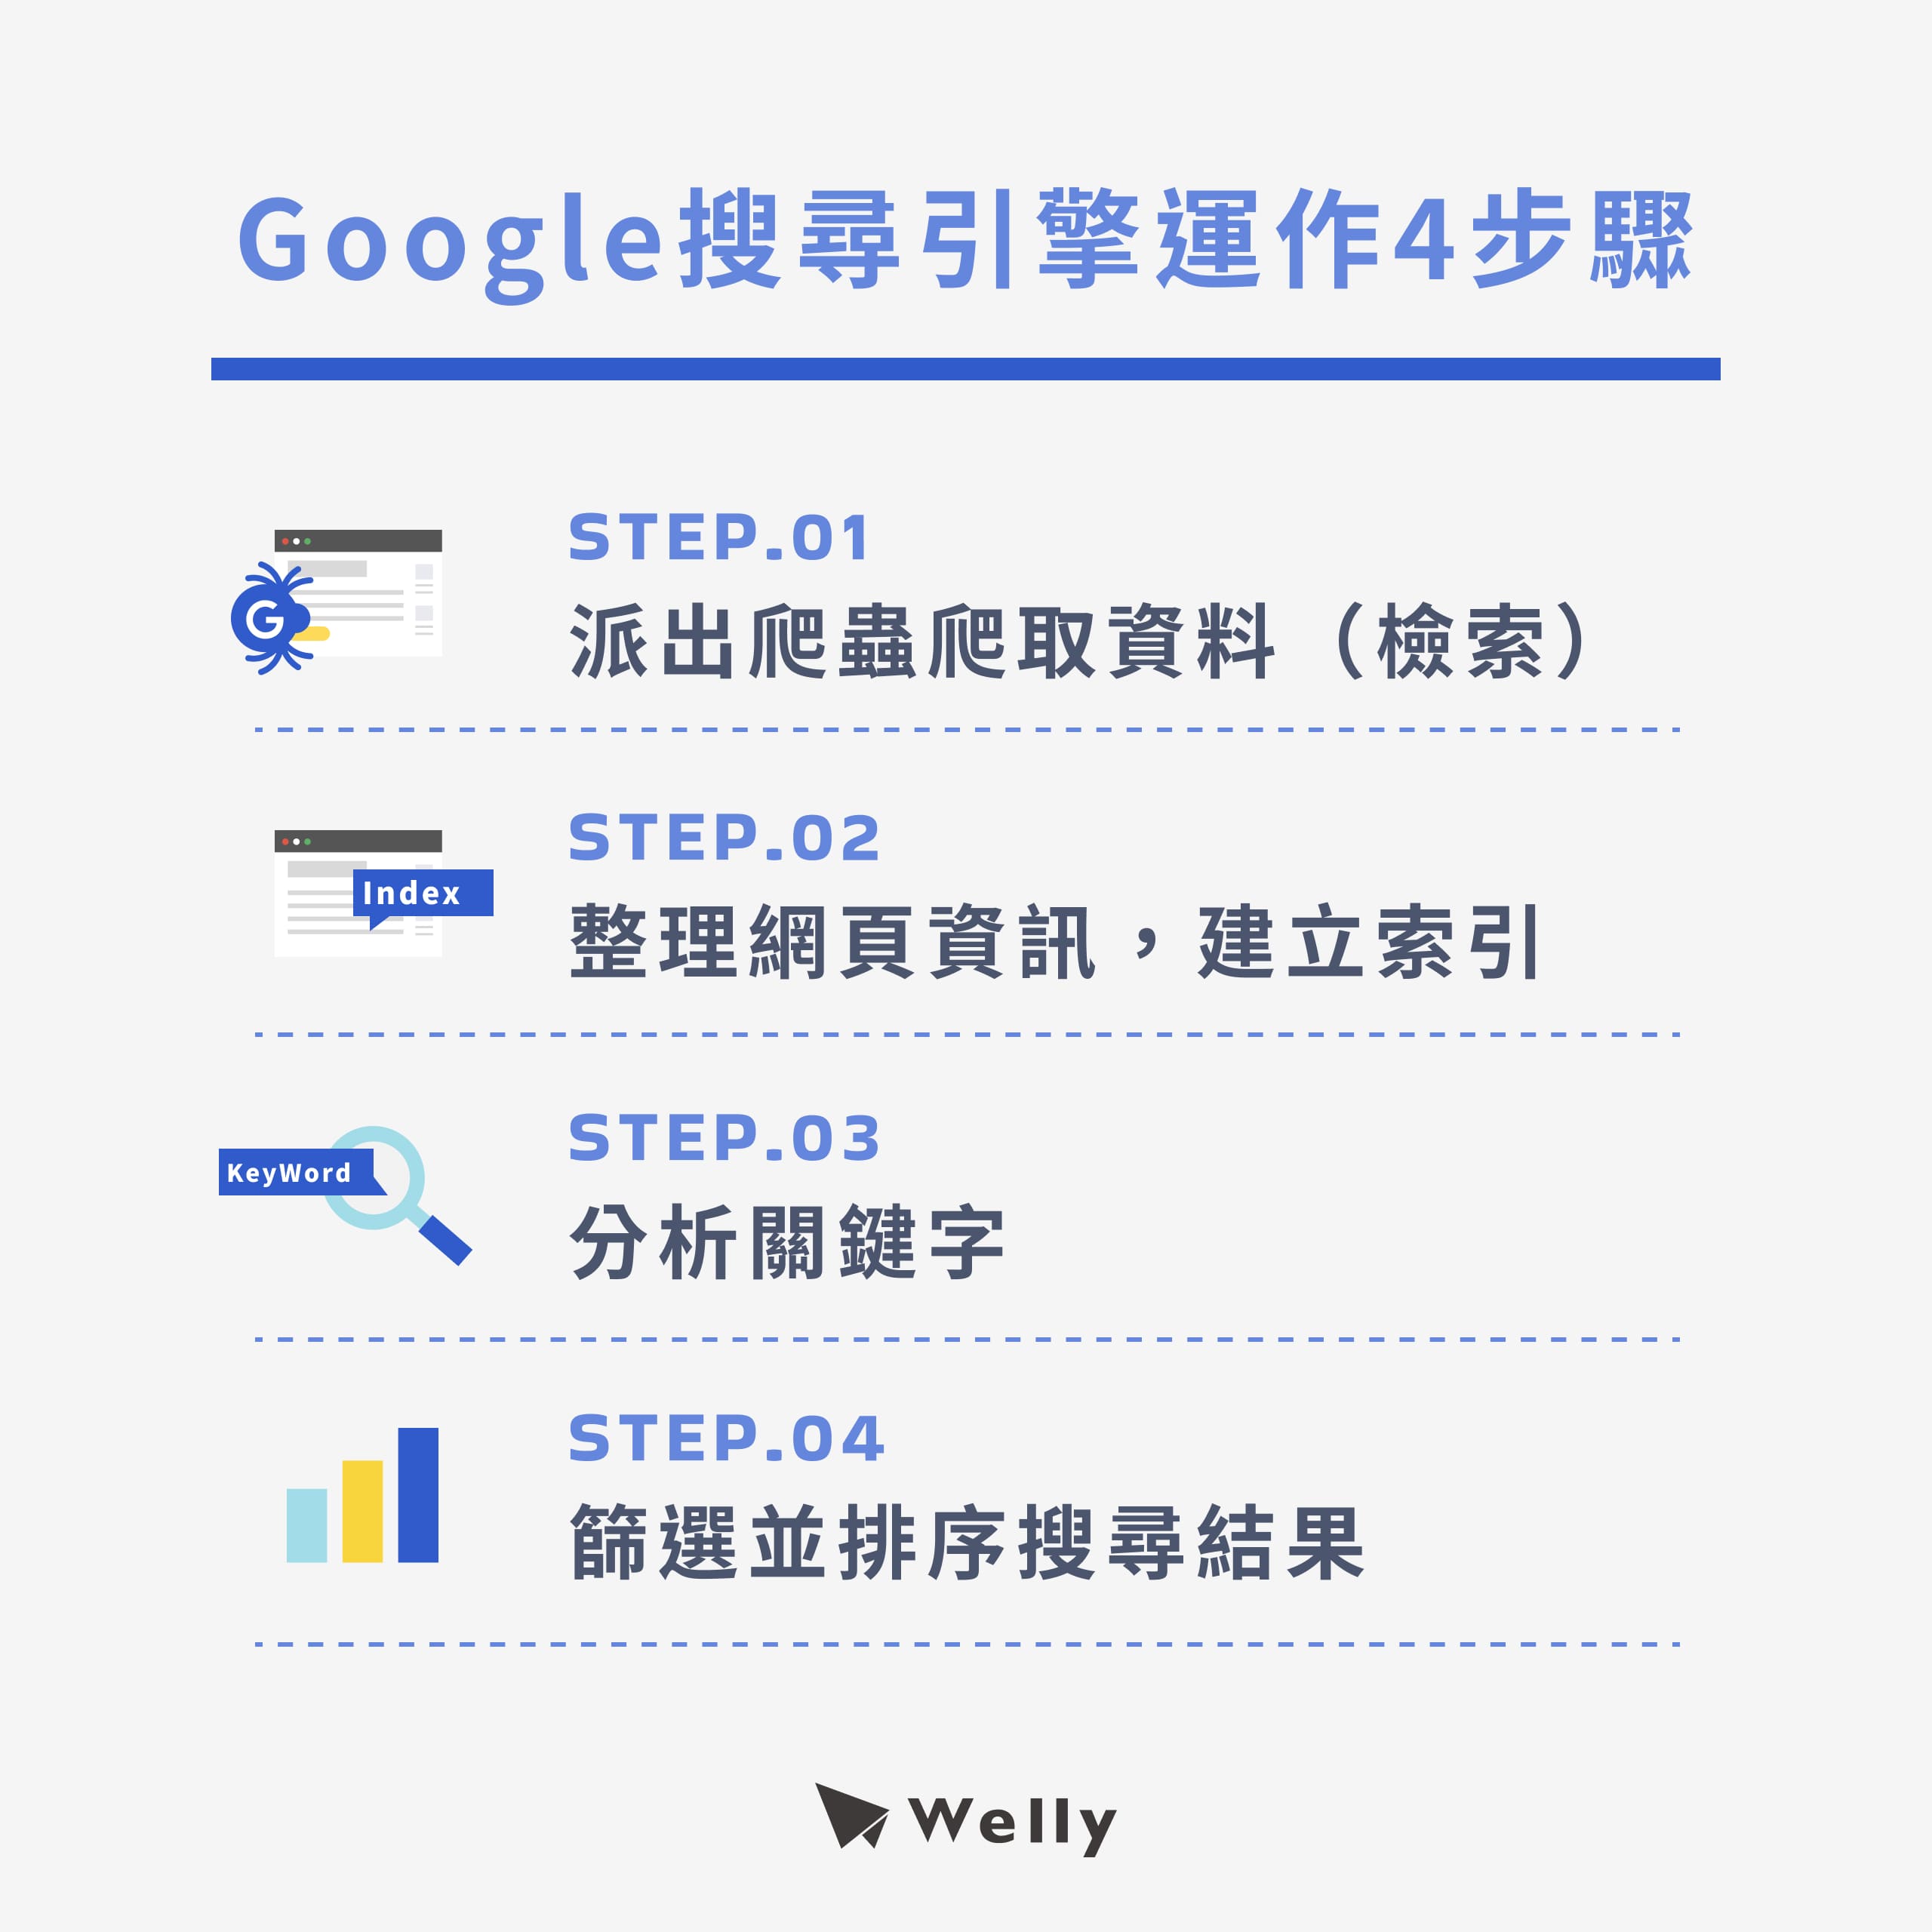 Google搜尋引擎運作4步驟：檢索、索引、分析、排序